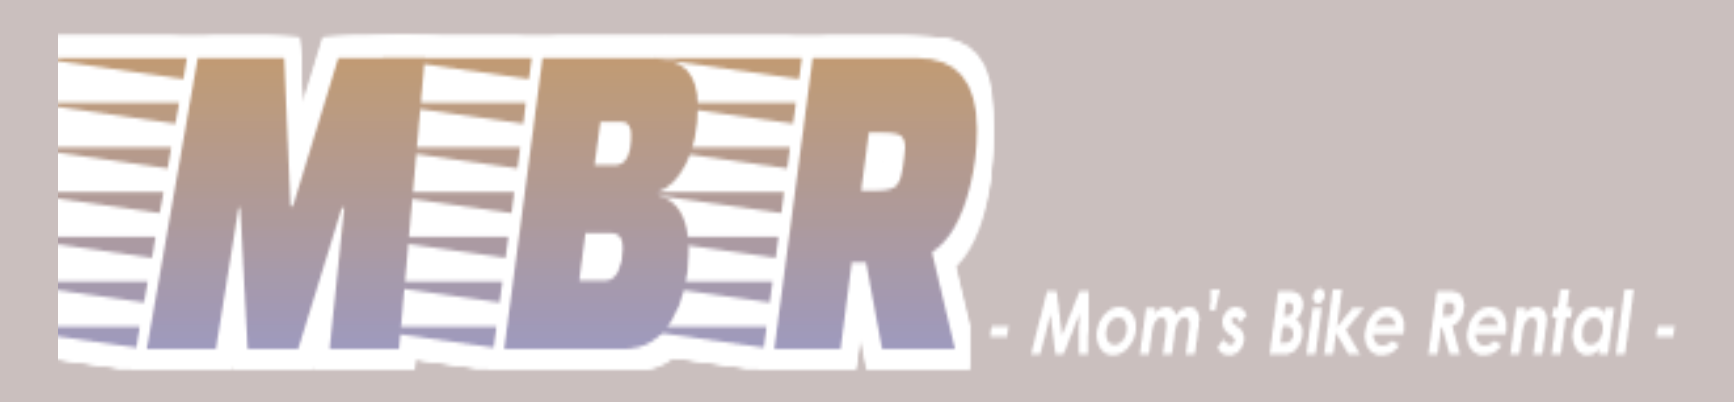 MBR-Mom's Bike Rental-ロゴ